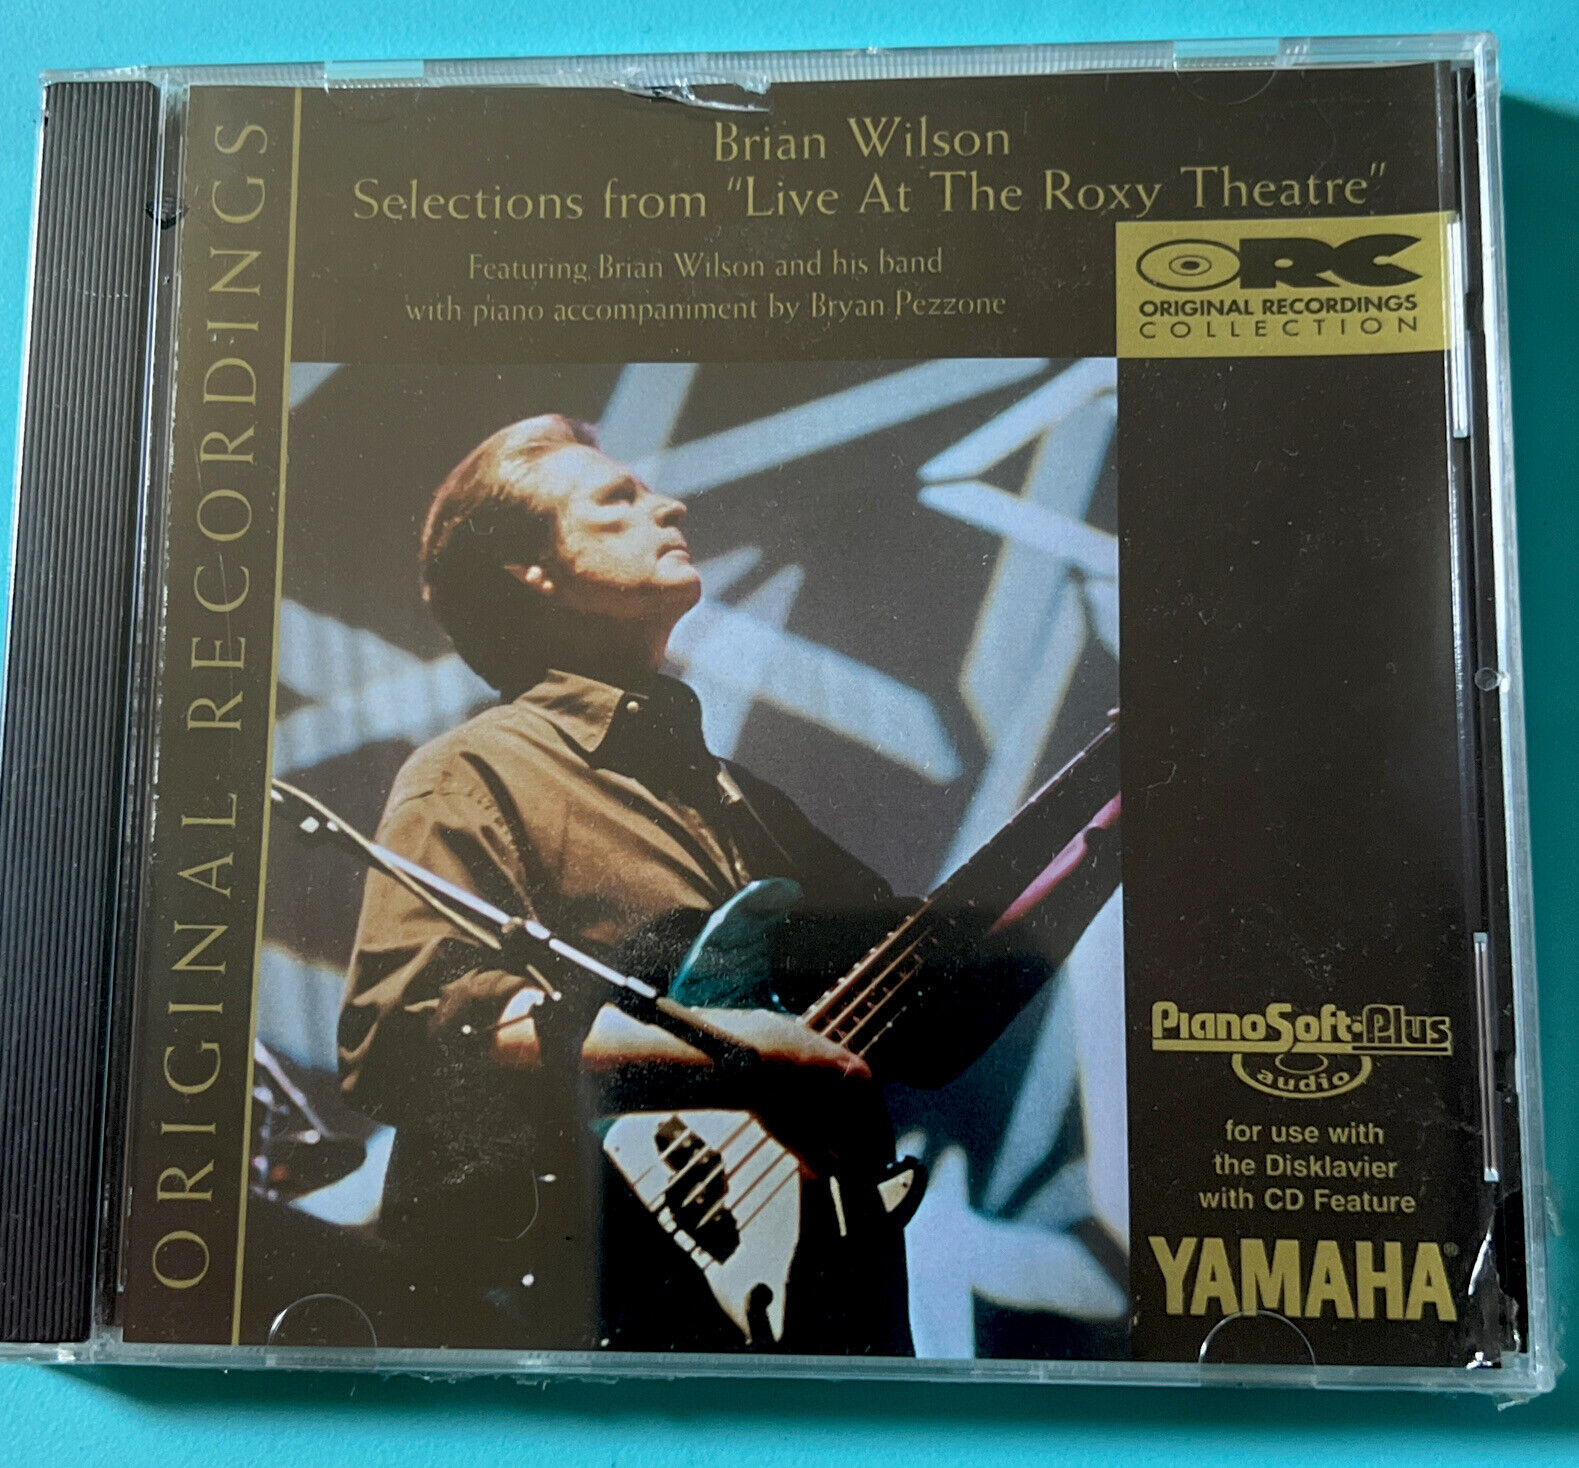 BRIAN WILSON LIVE AT ROXY THEATRE Yamaha Disklavier CD PLAYER PIANO Soft+ NEW ❤️